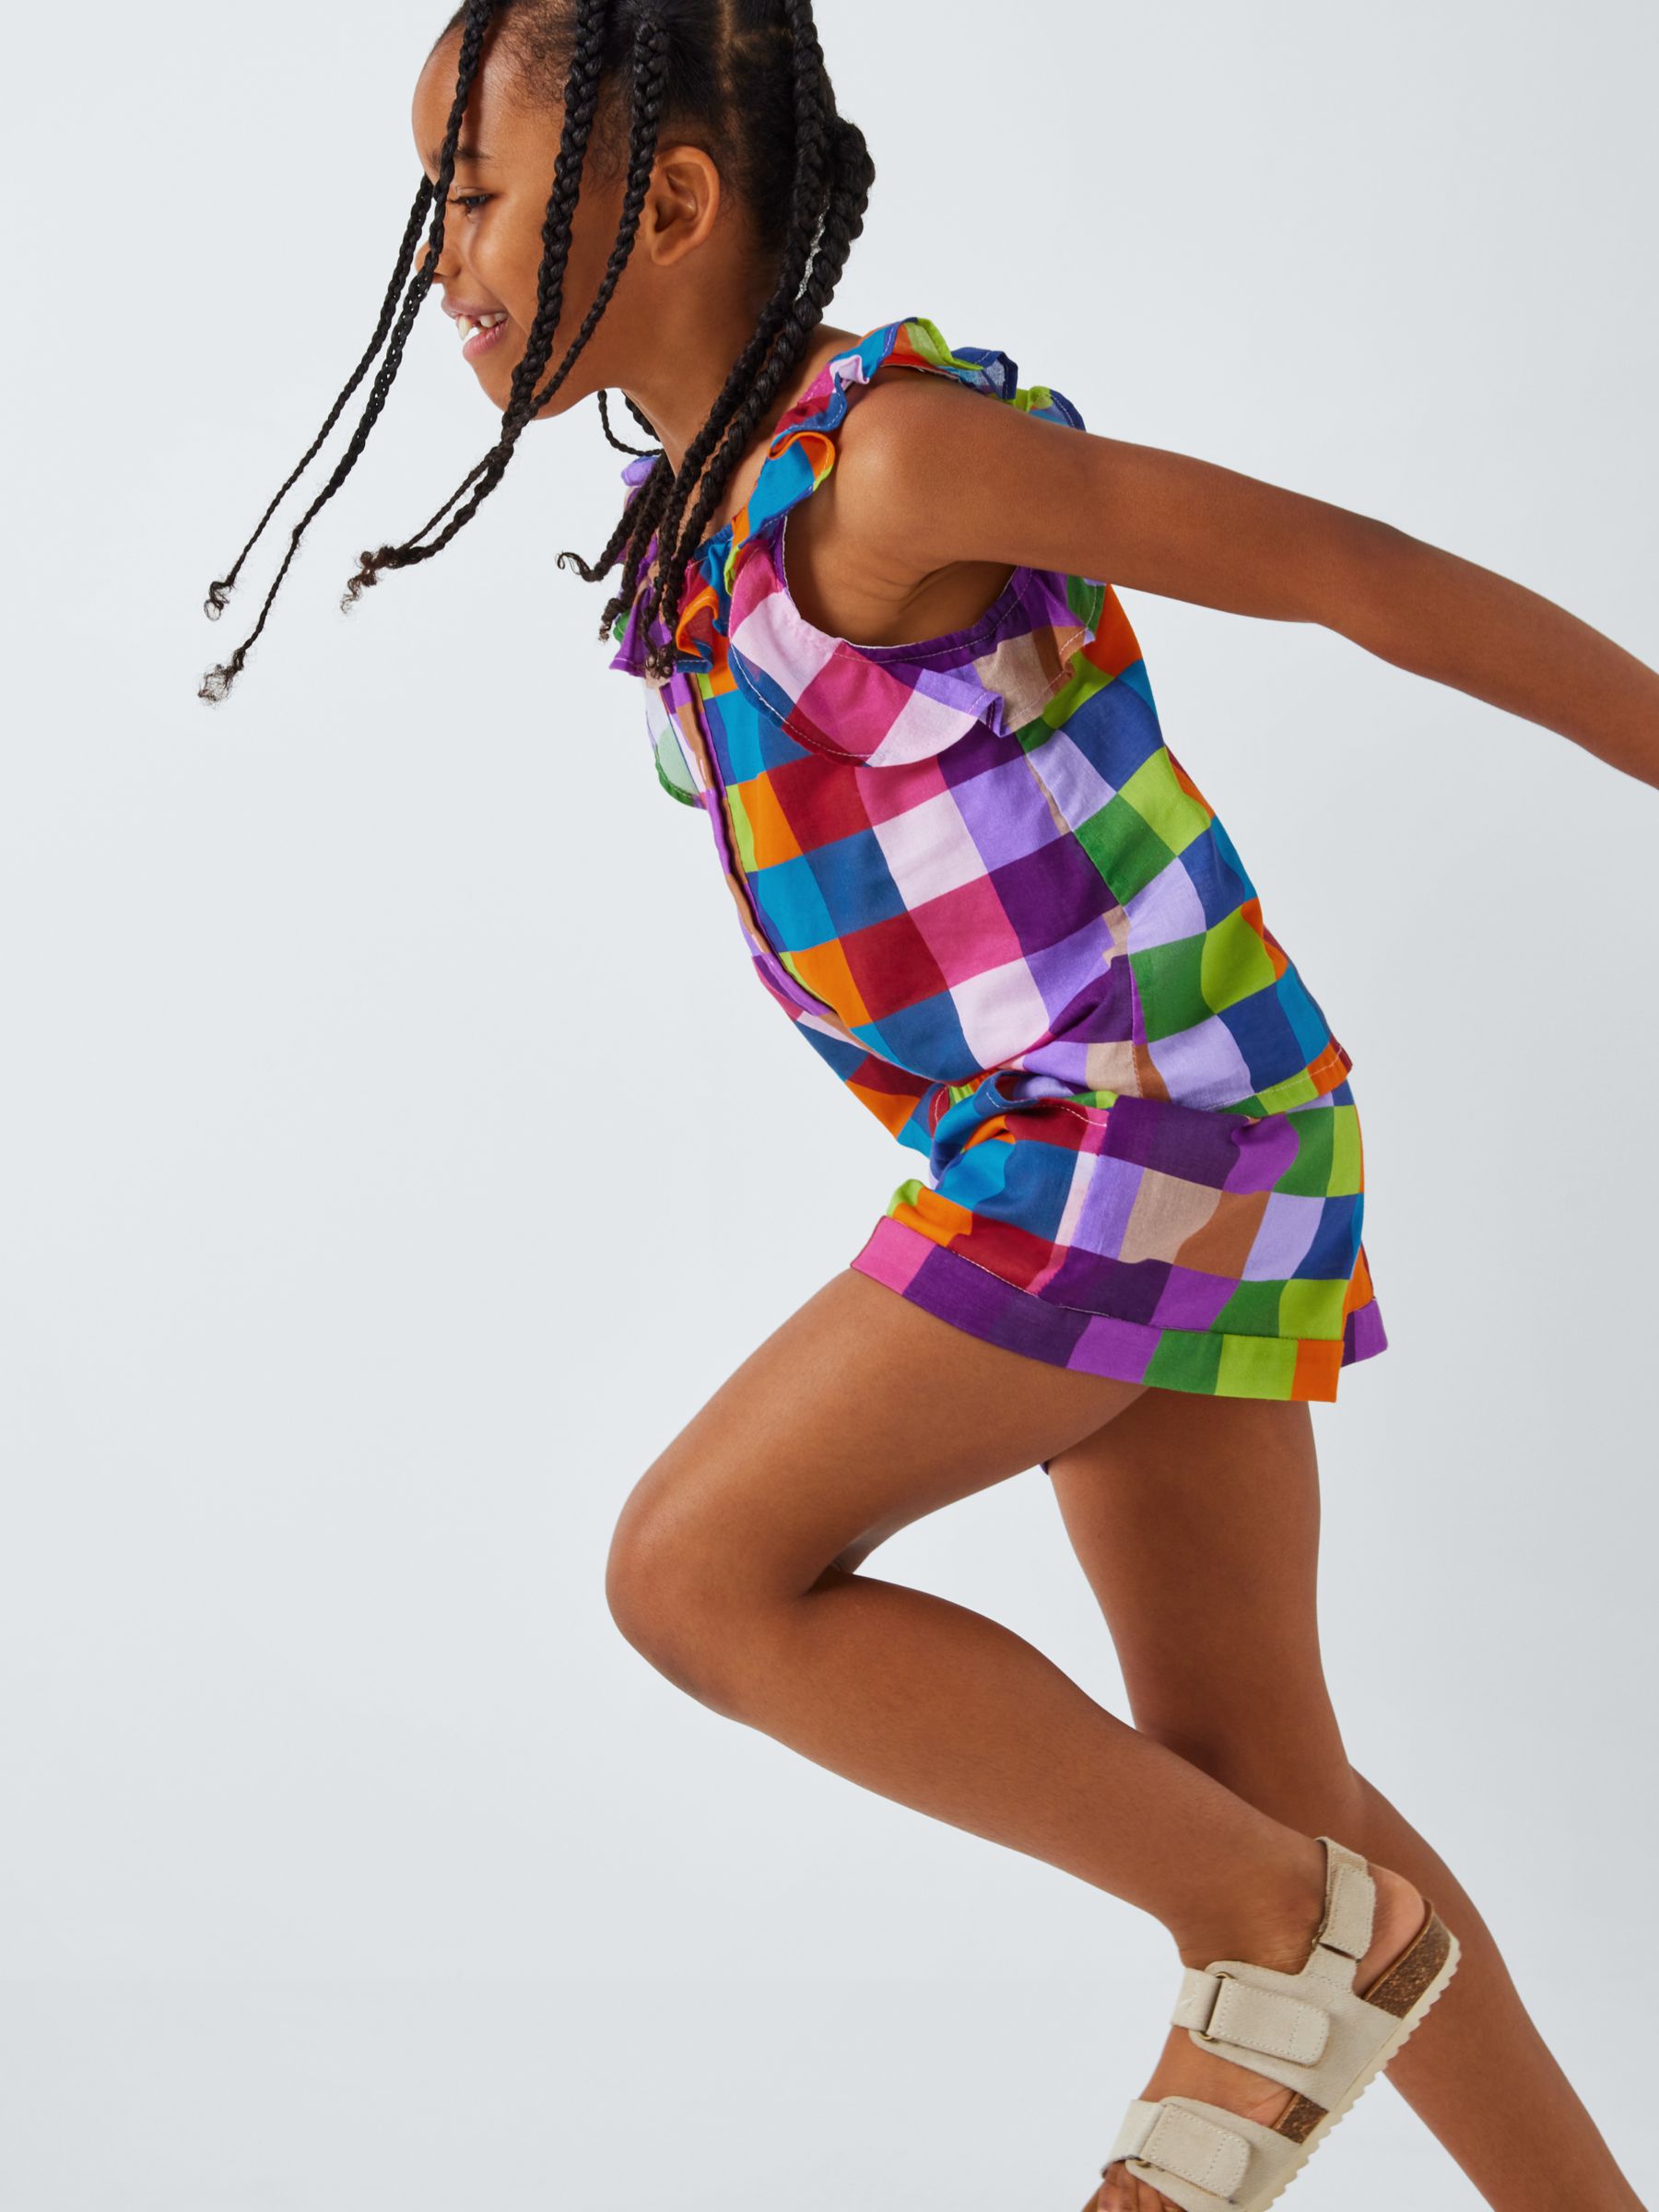 Olivia Rubin Kids' Sara Rainbow Check Shorts, Multi, 4-5 years